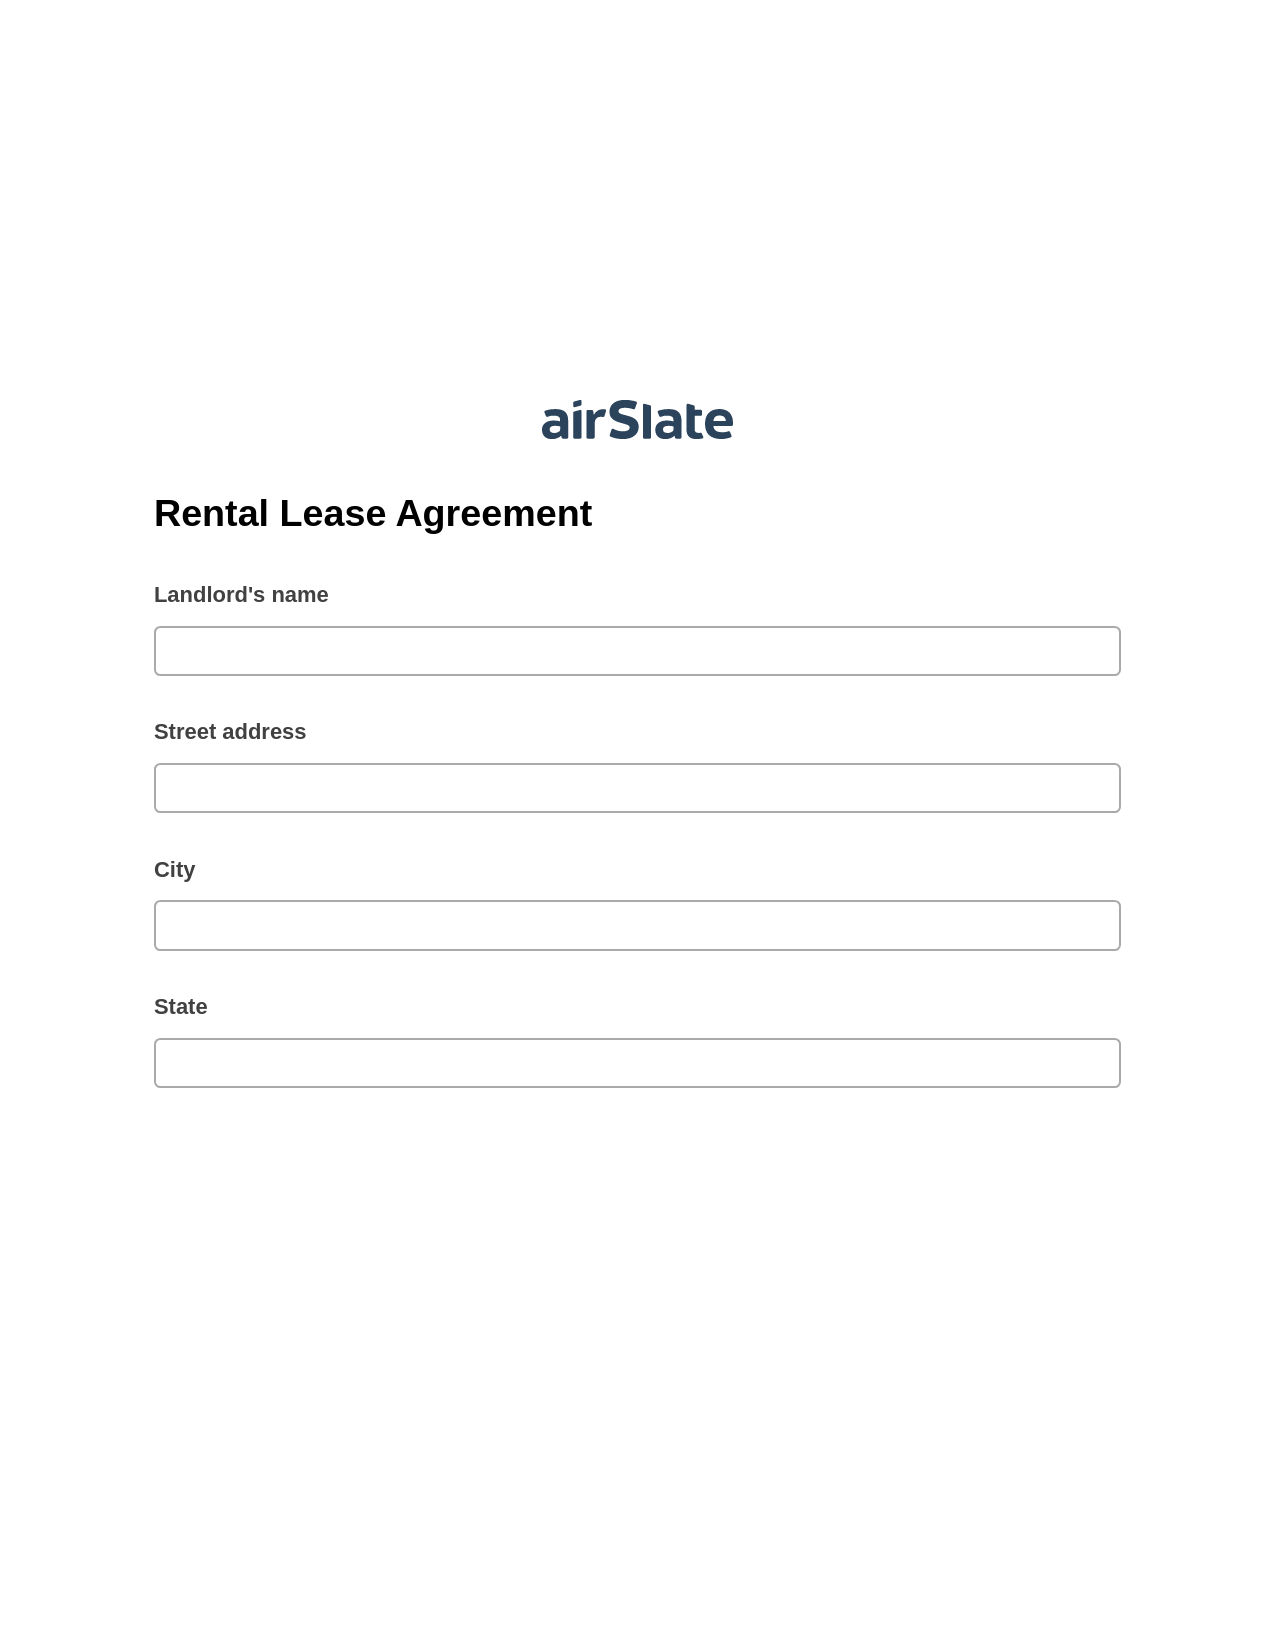 Multirole Rental Lease Agreement Pre-fill from Google Sheet Dropdown Options Bot, Create slate bot, Post-finish Document Bot